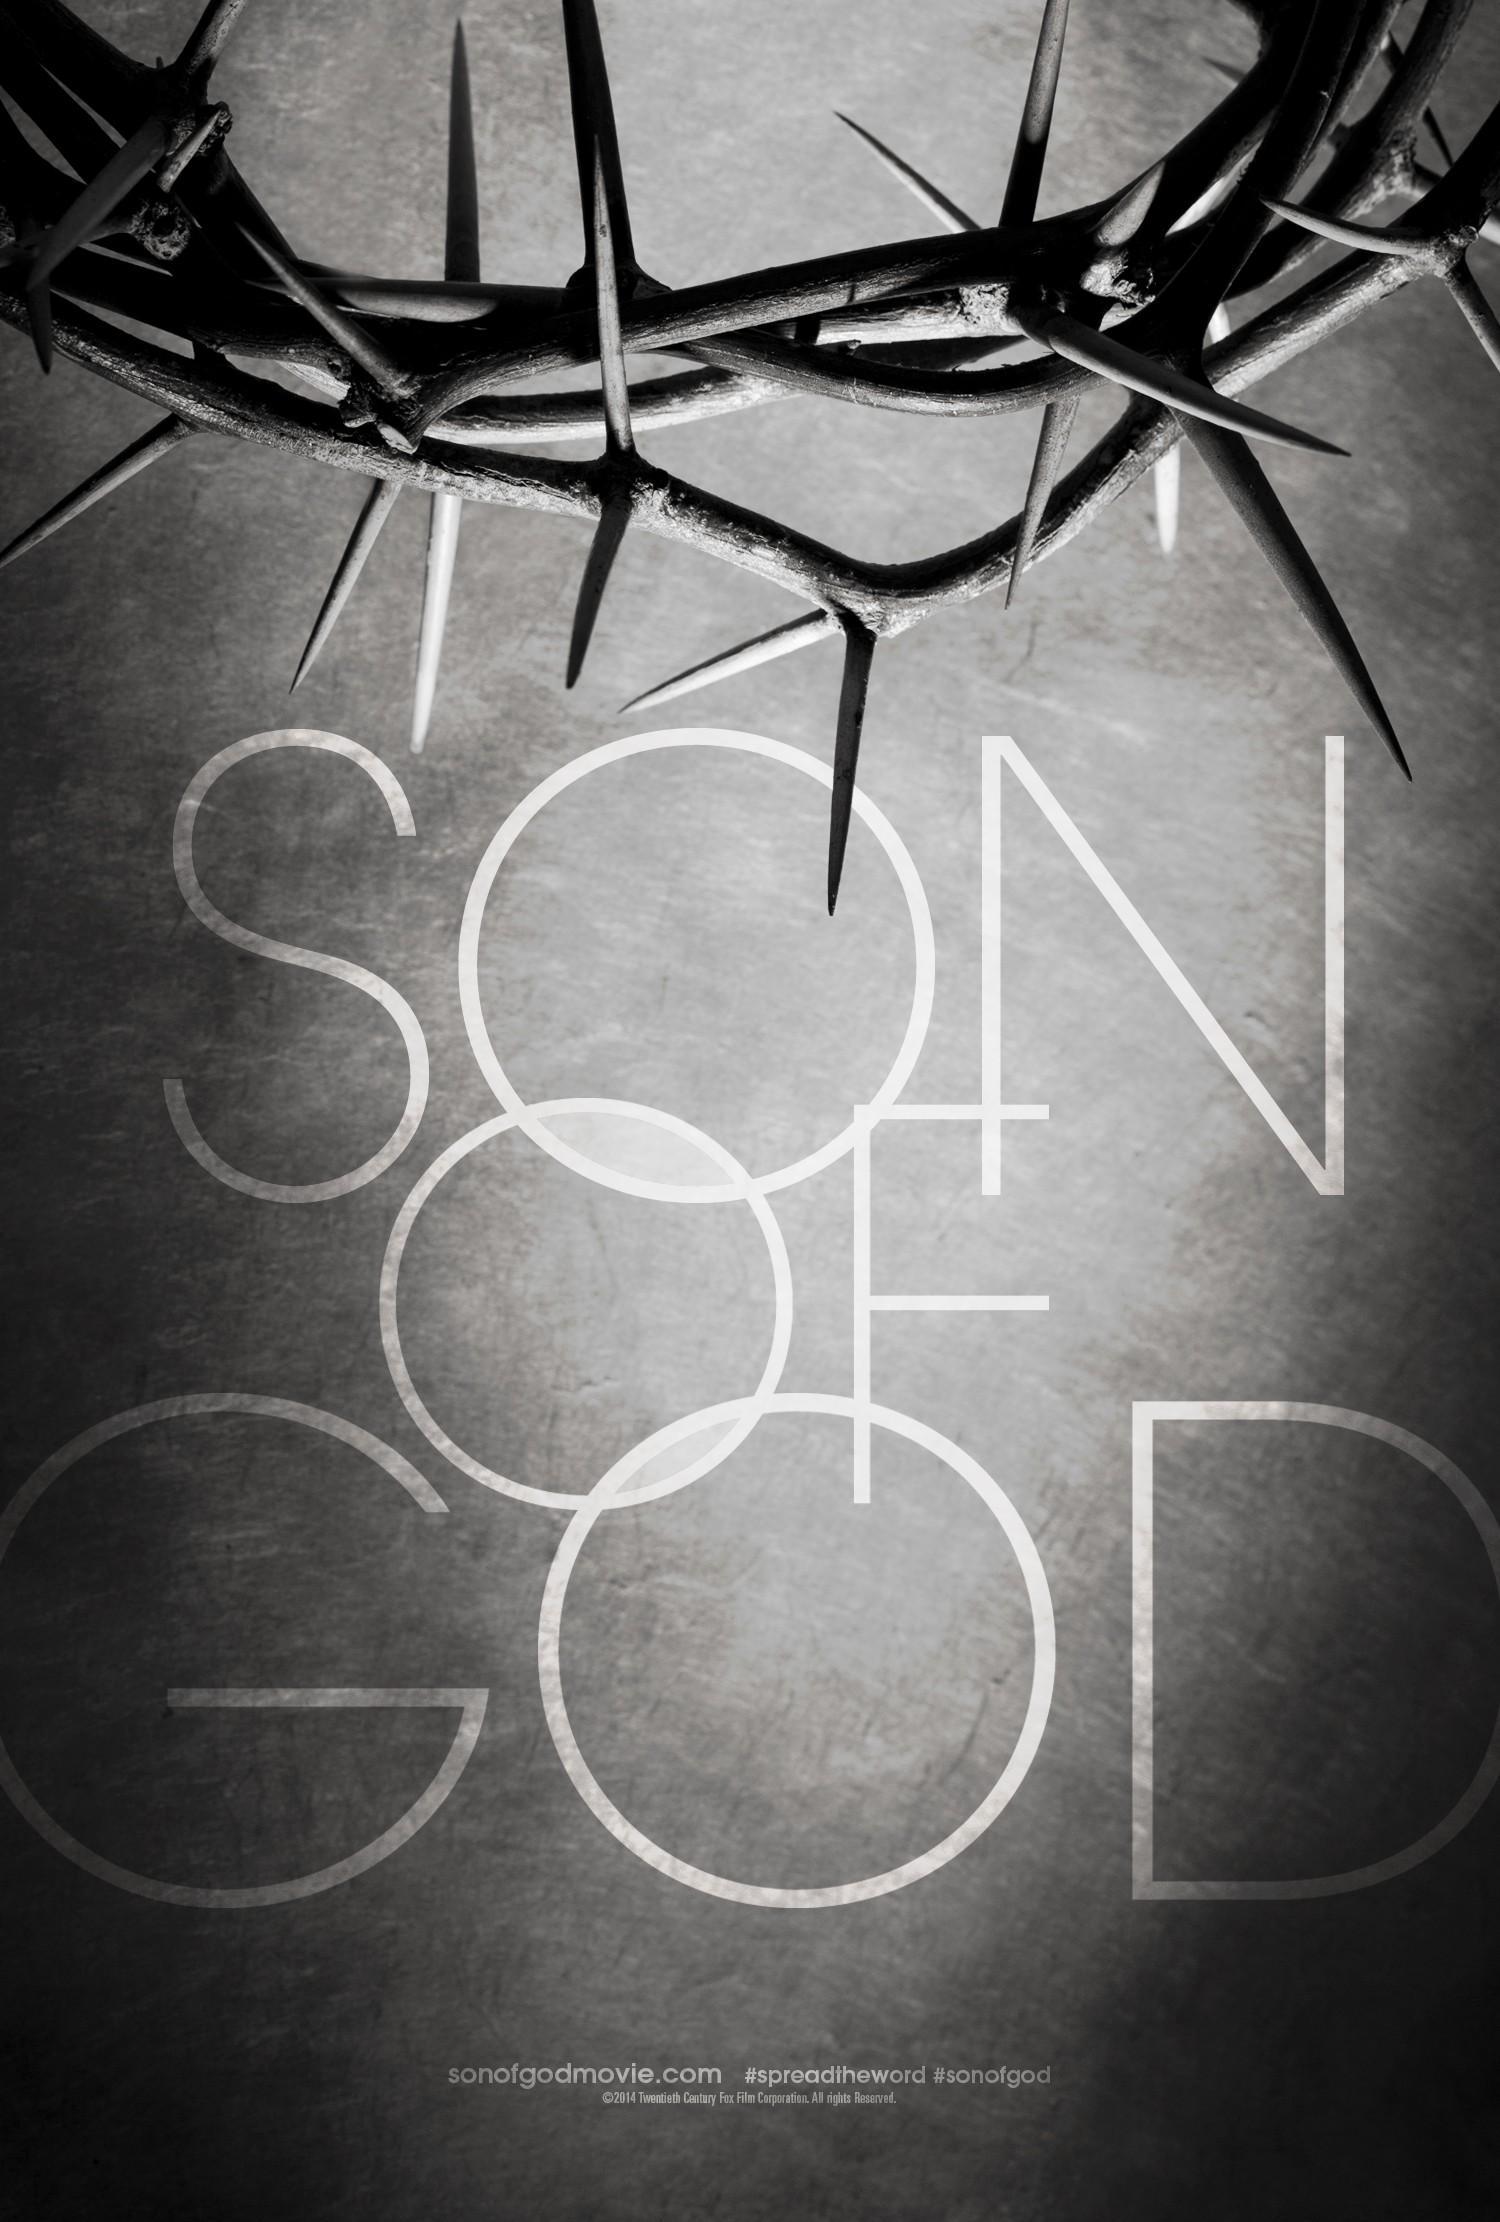 Постер фильма Сын Божий | Son of God